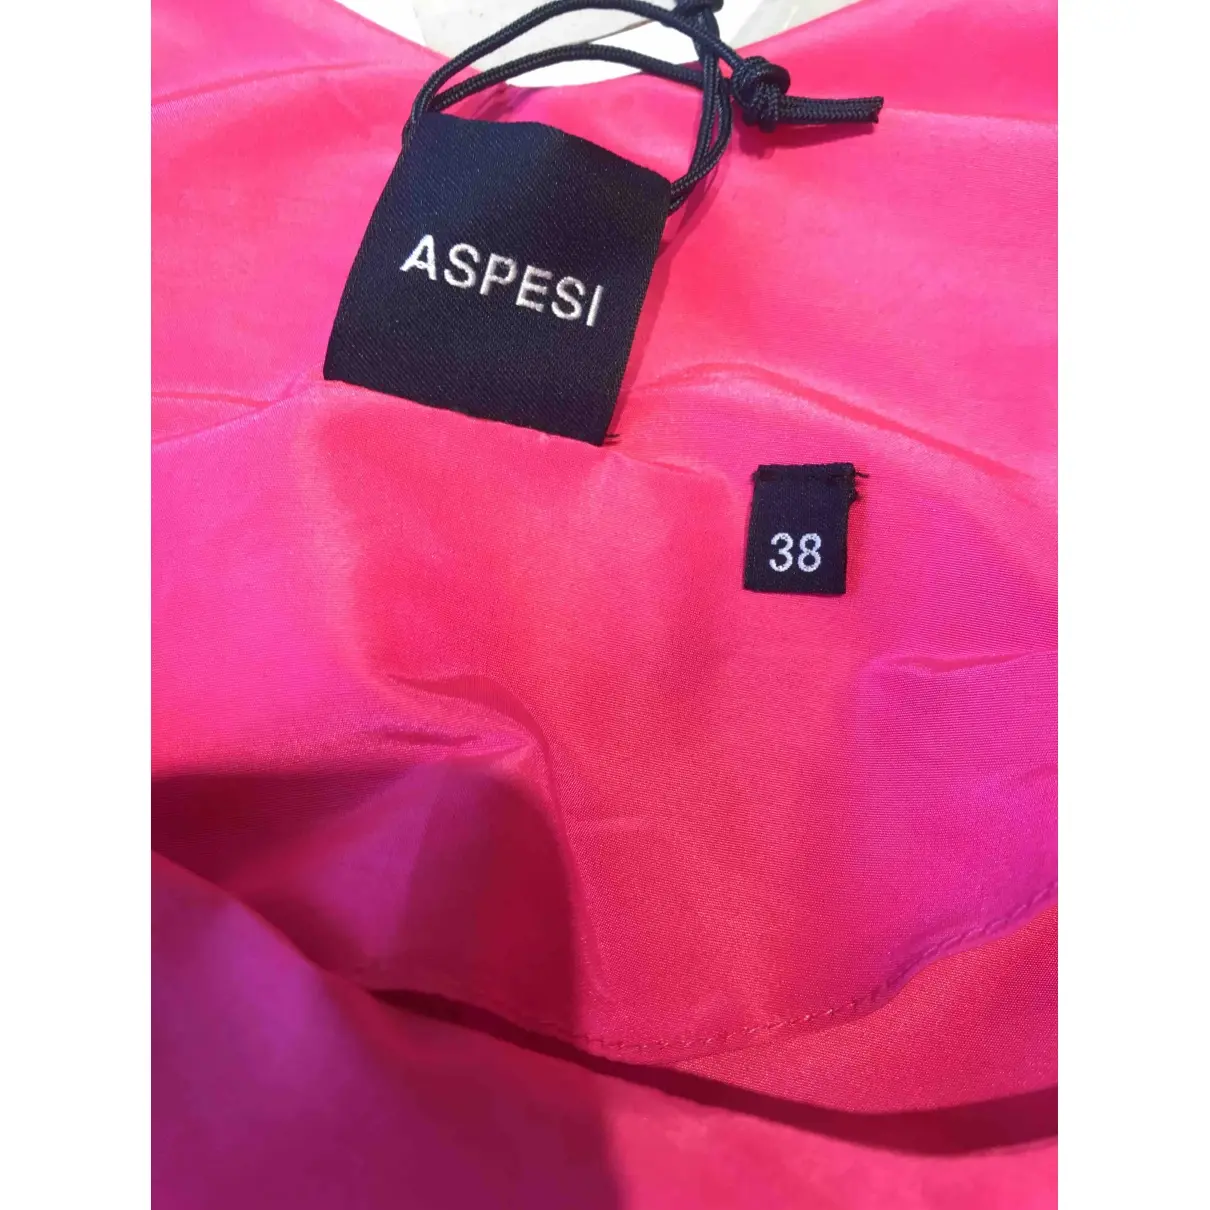 Buy Aspesi Dress online